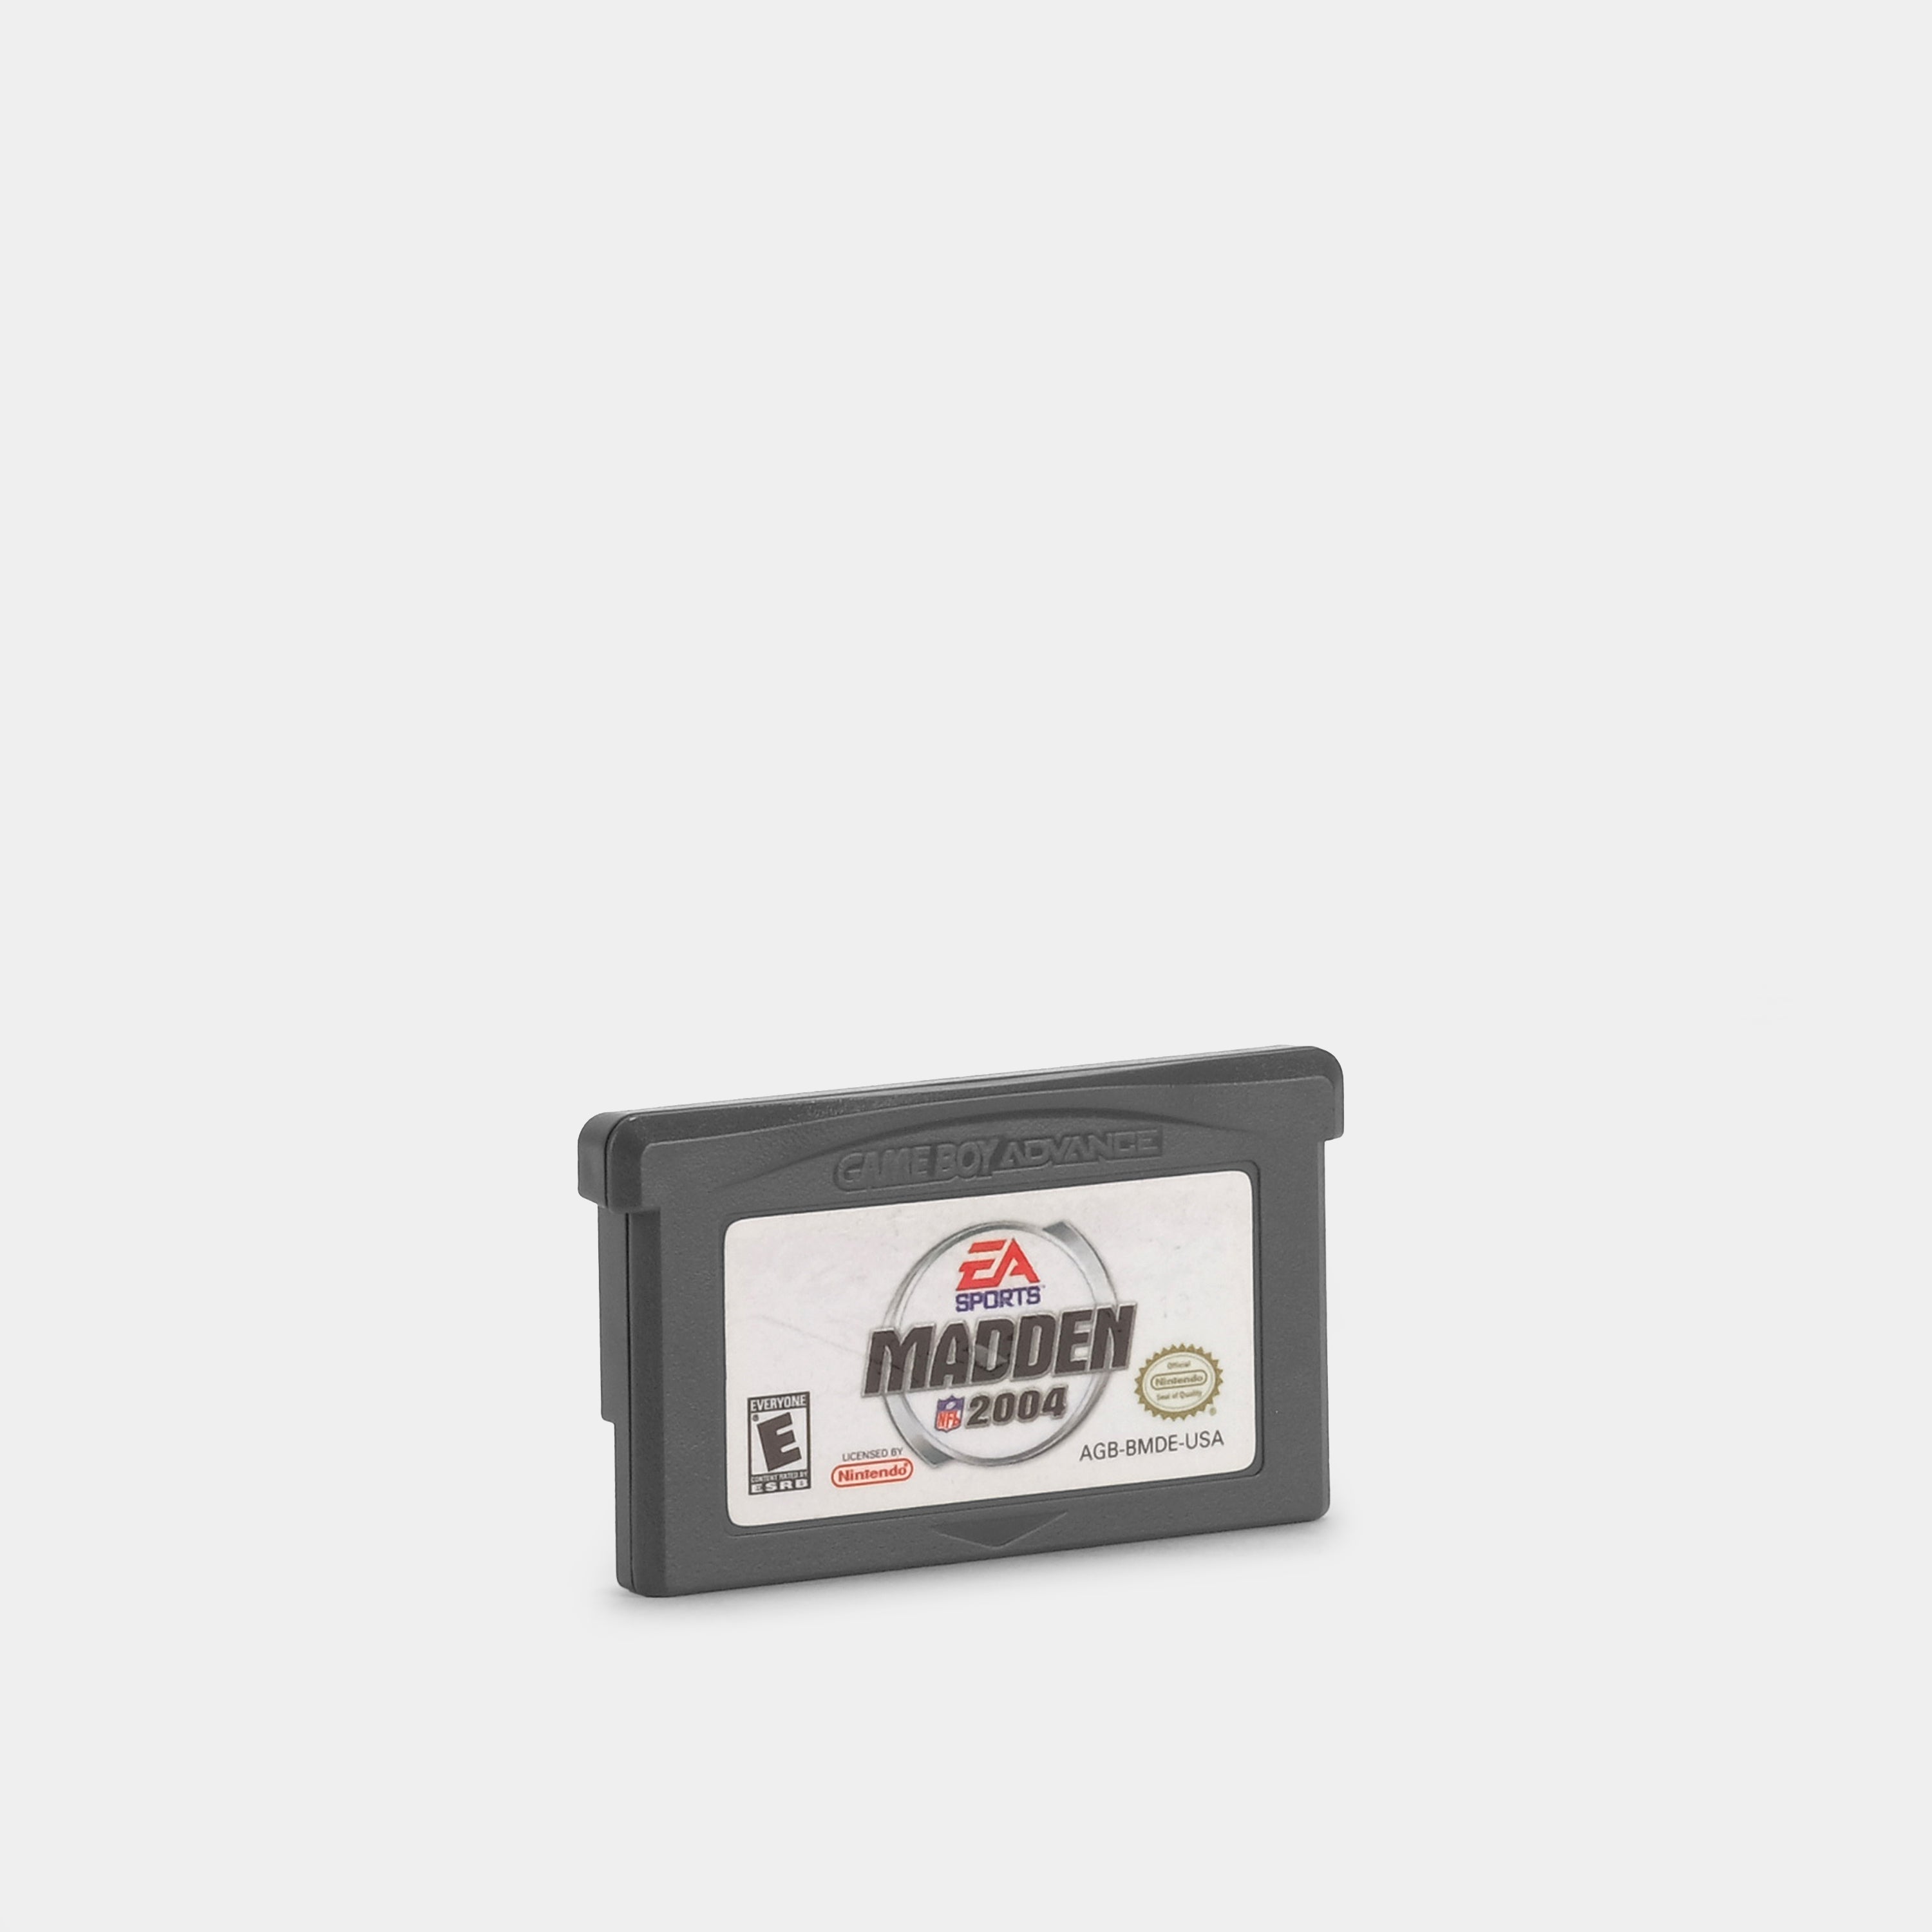 Madden NFL 2004 Game Boy Advance Game